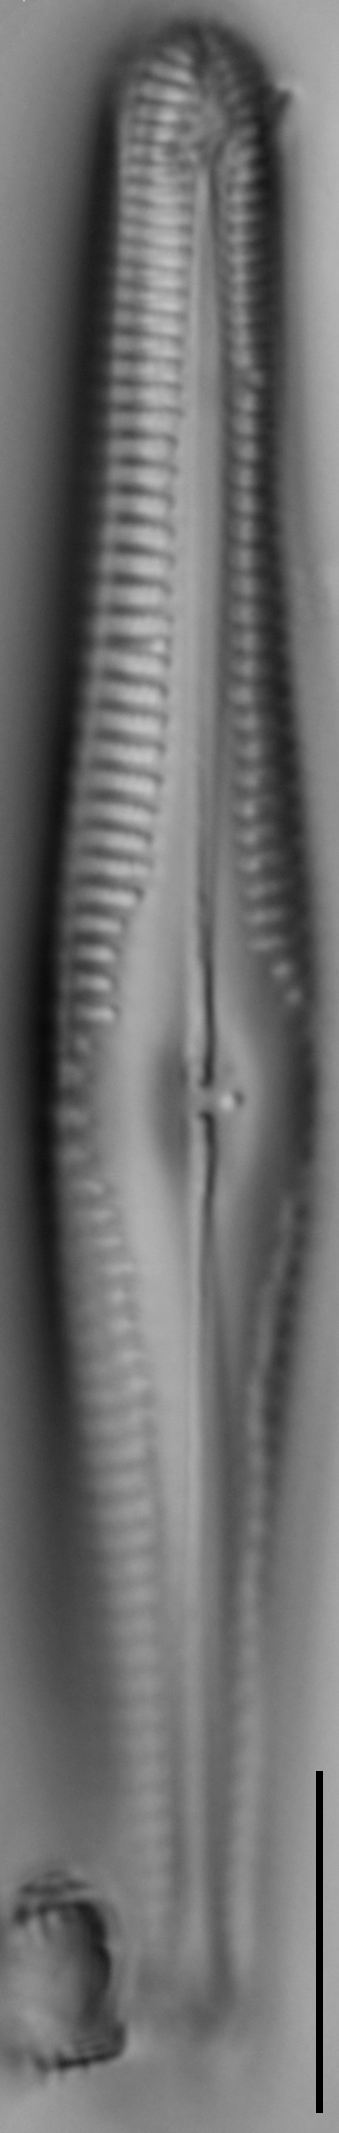 G Amerhombicum  B Isotype 20170301 06 Cl